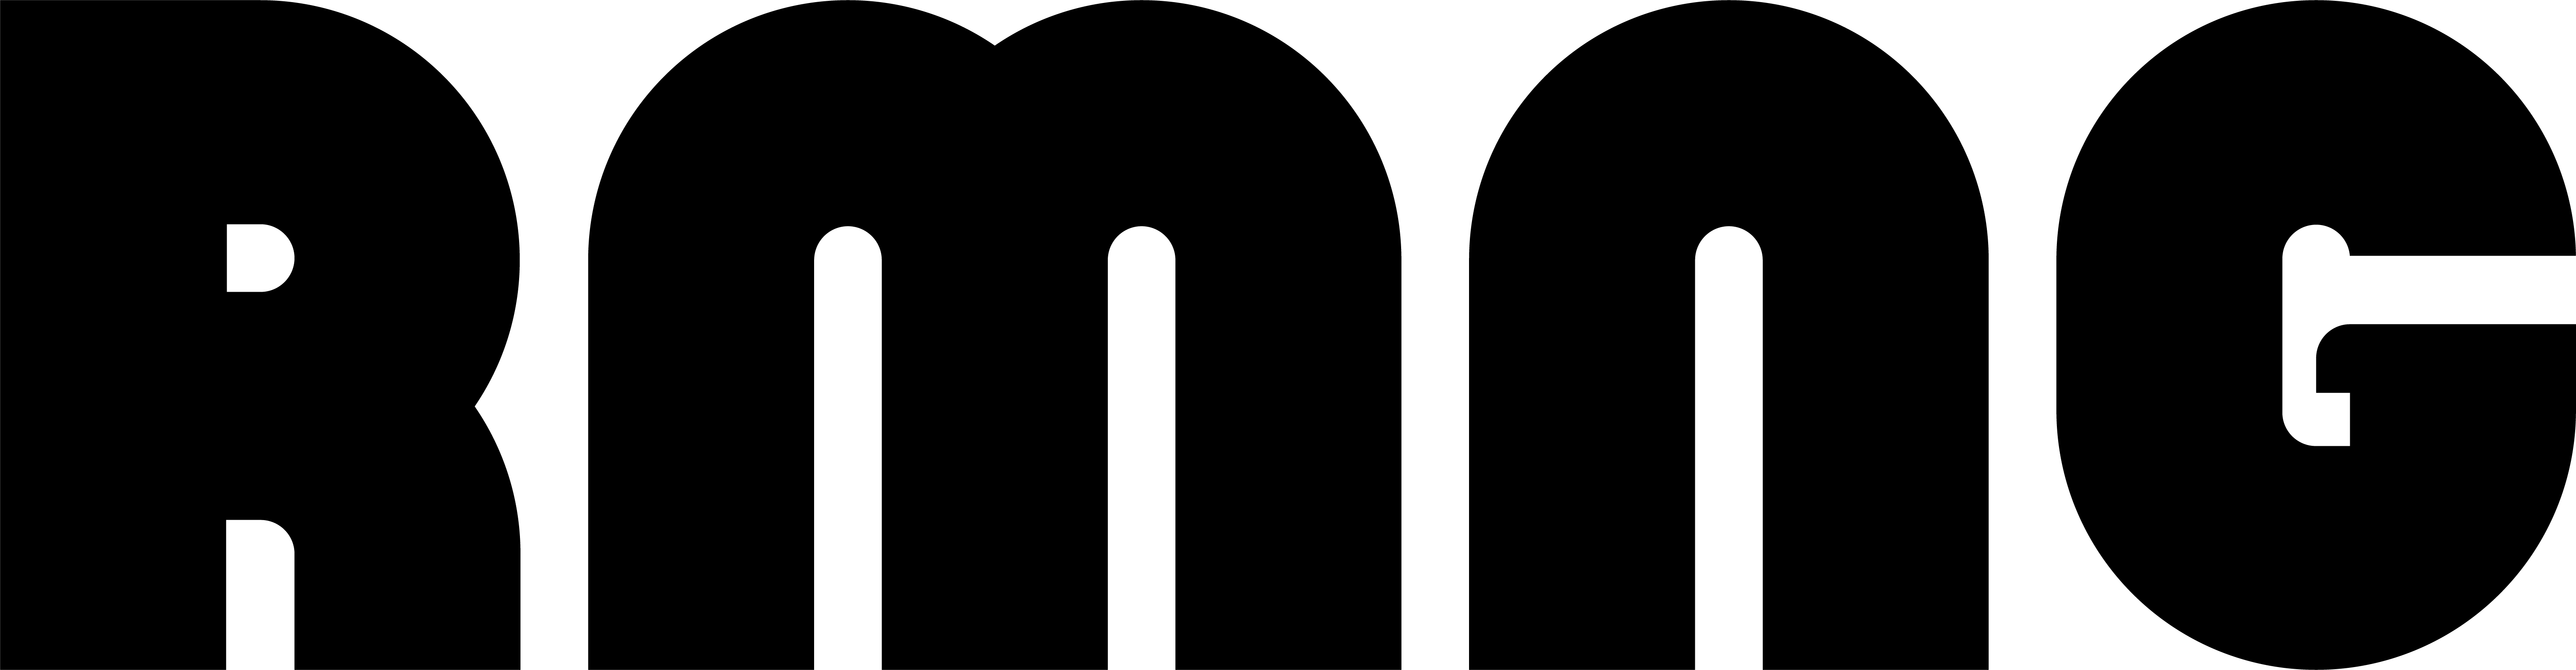 RMNG logo